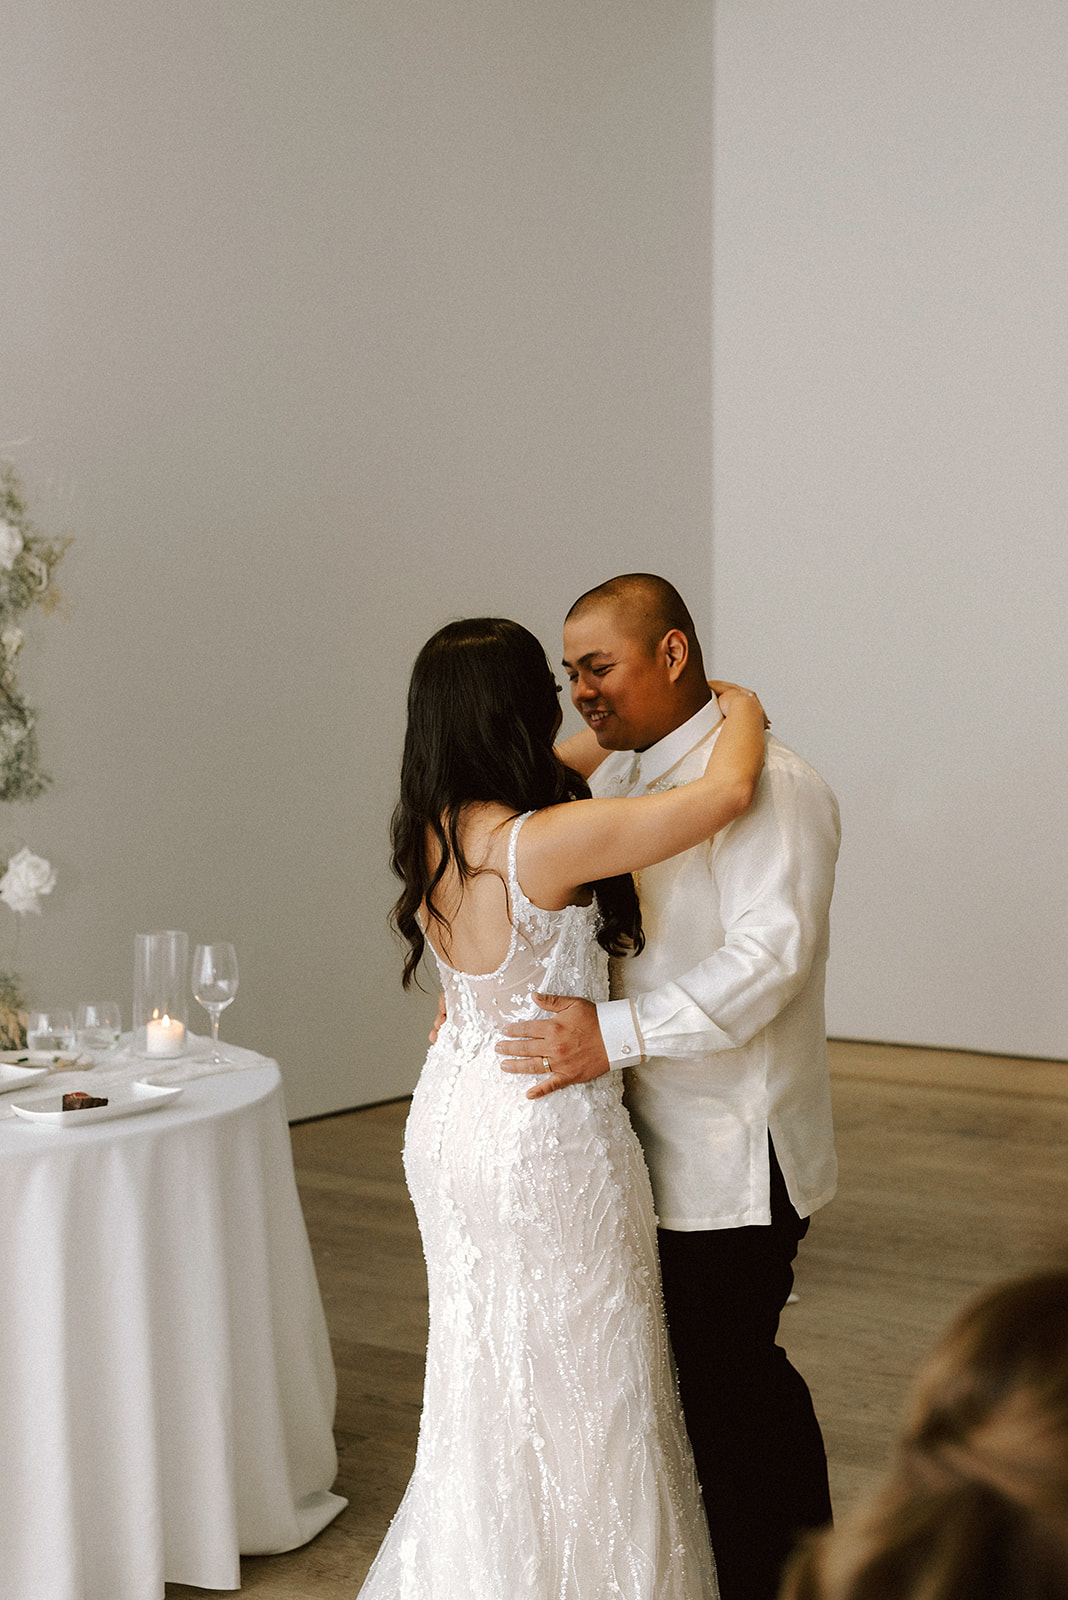 Vancouver wedding photographer capture photos of couple's wedding at Polygon Gallery